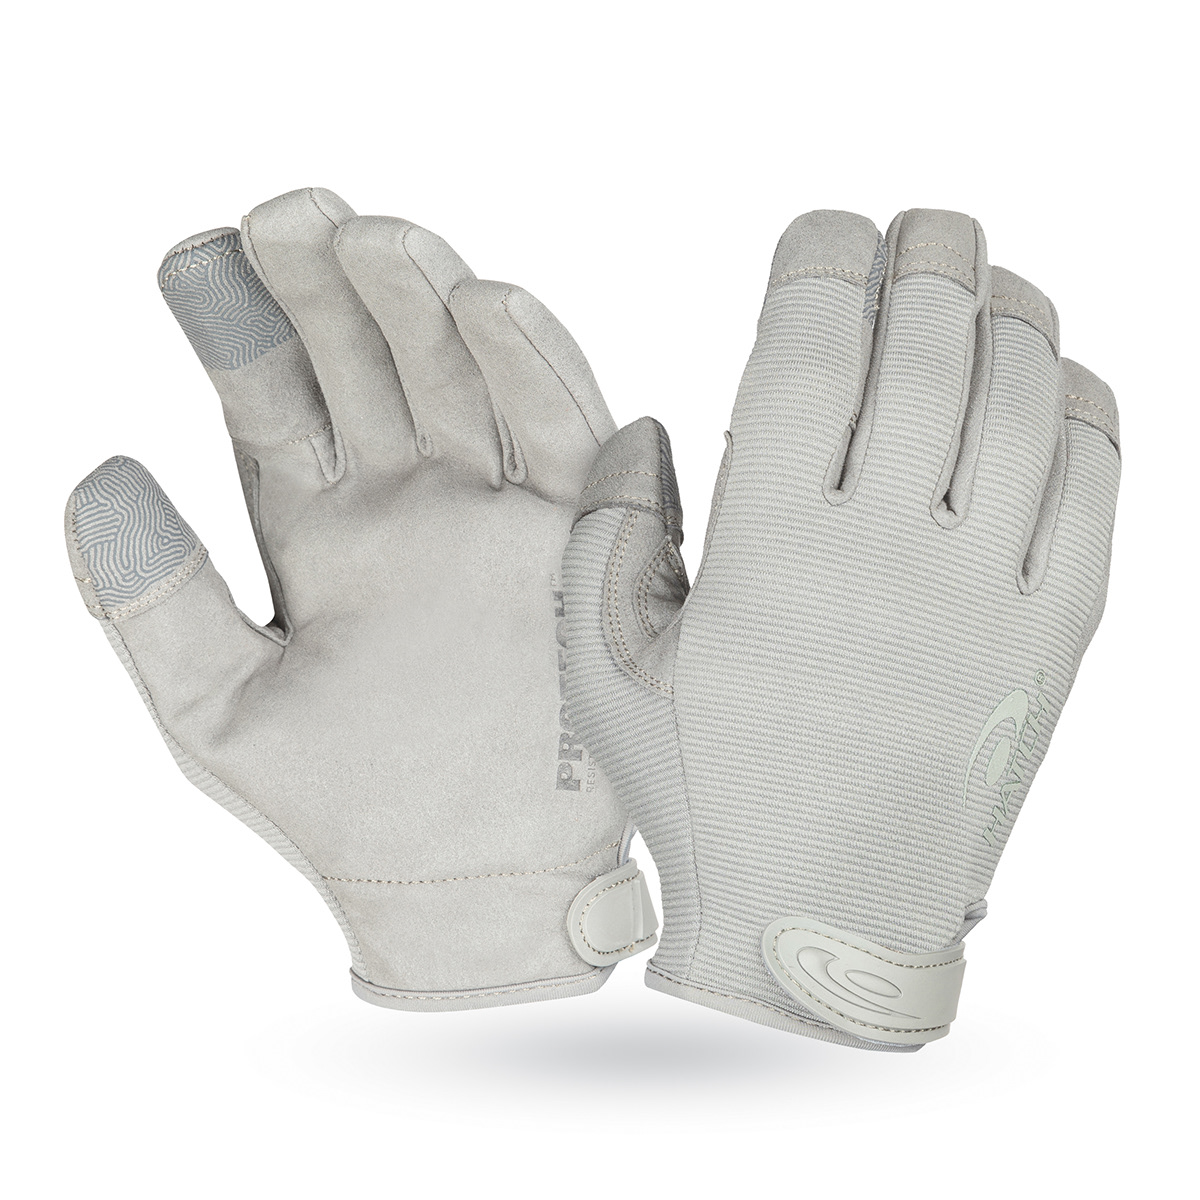 Glove design industrial gloves Product Management workplace saftey